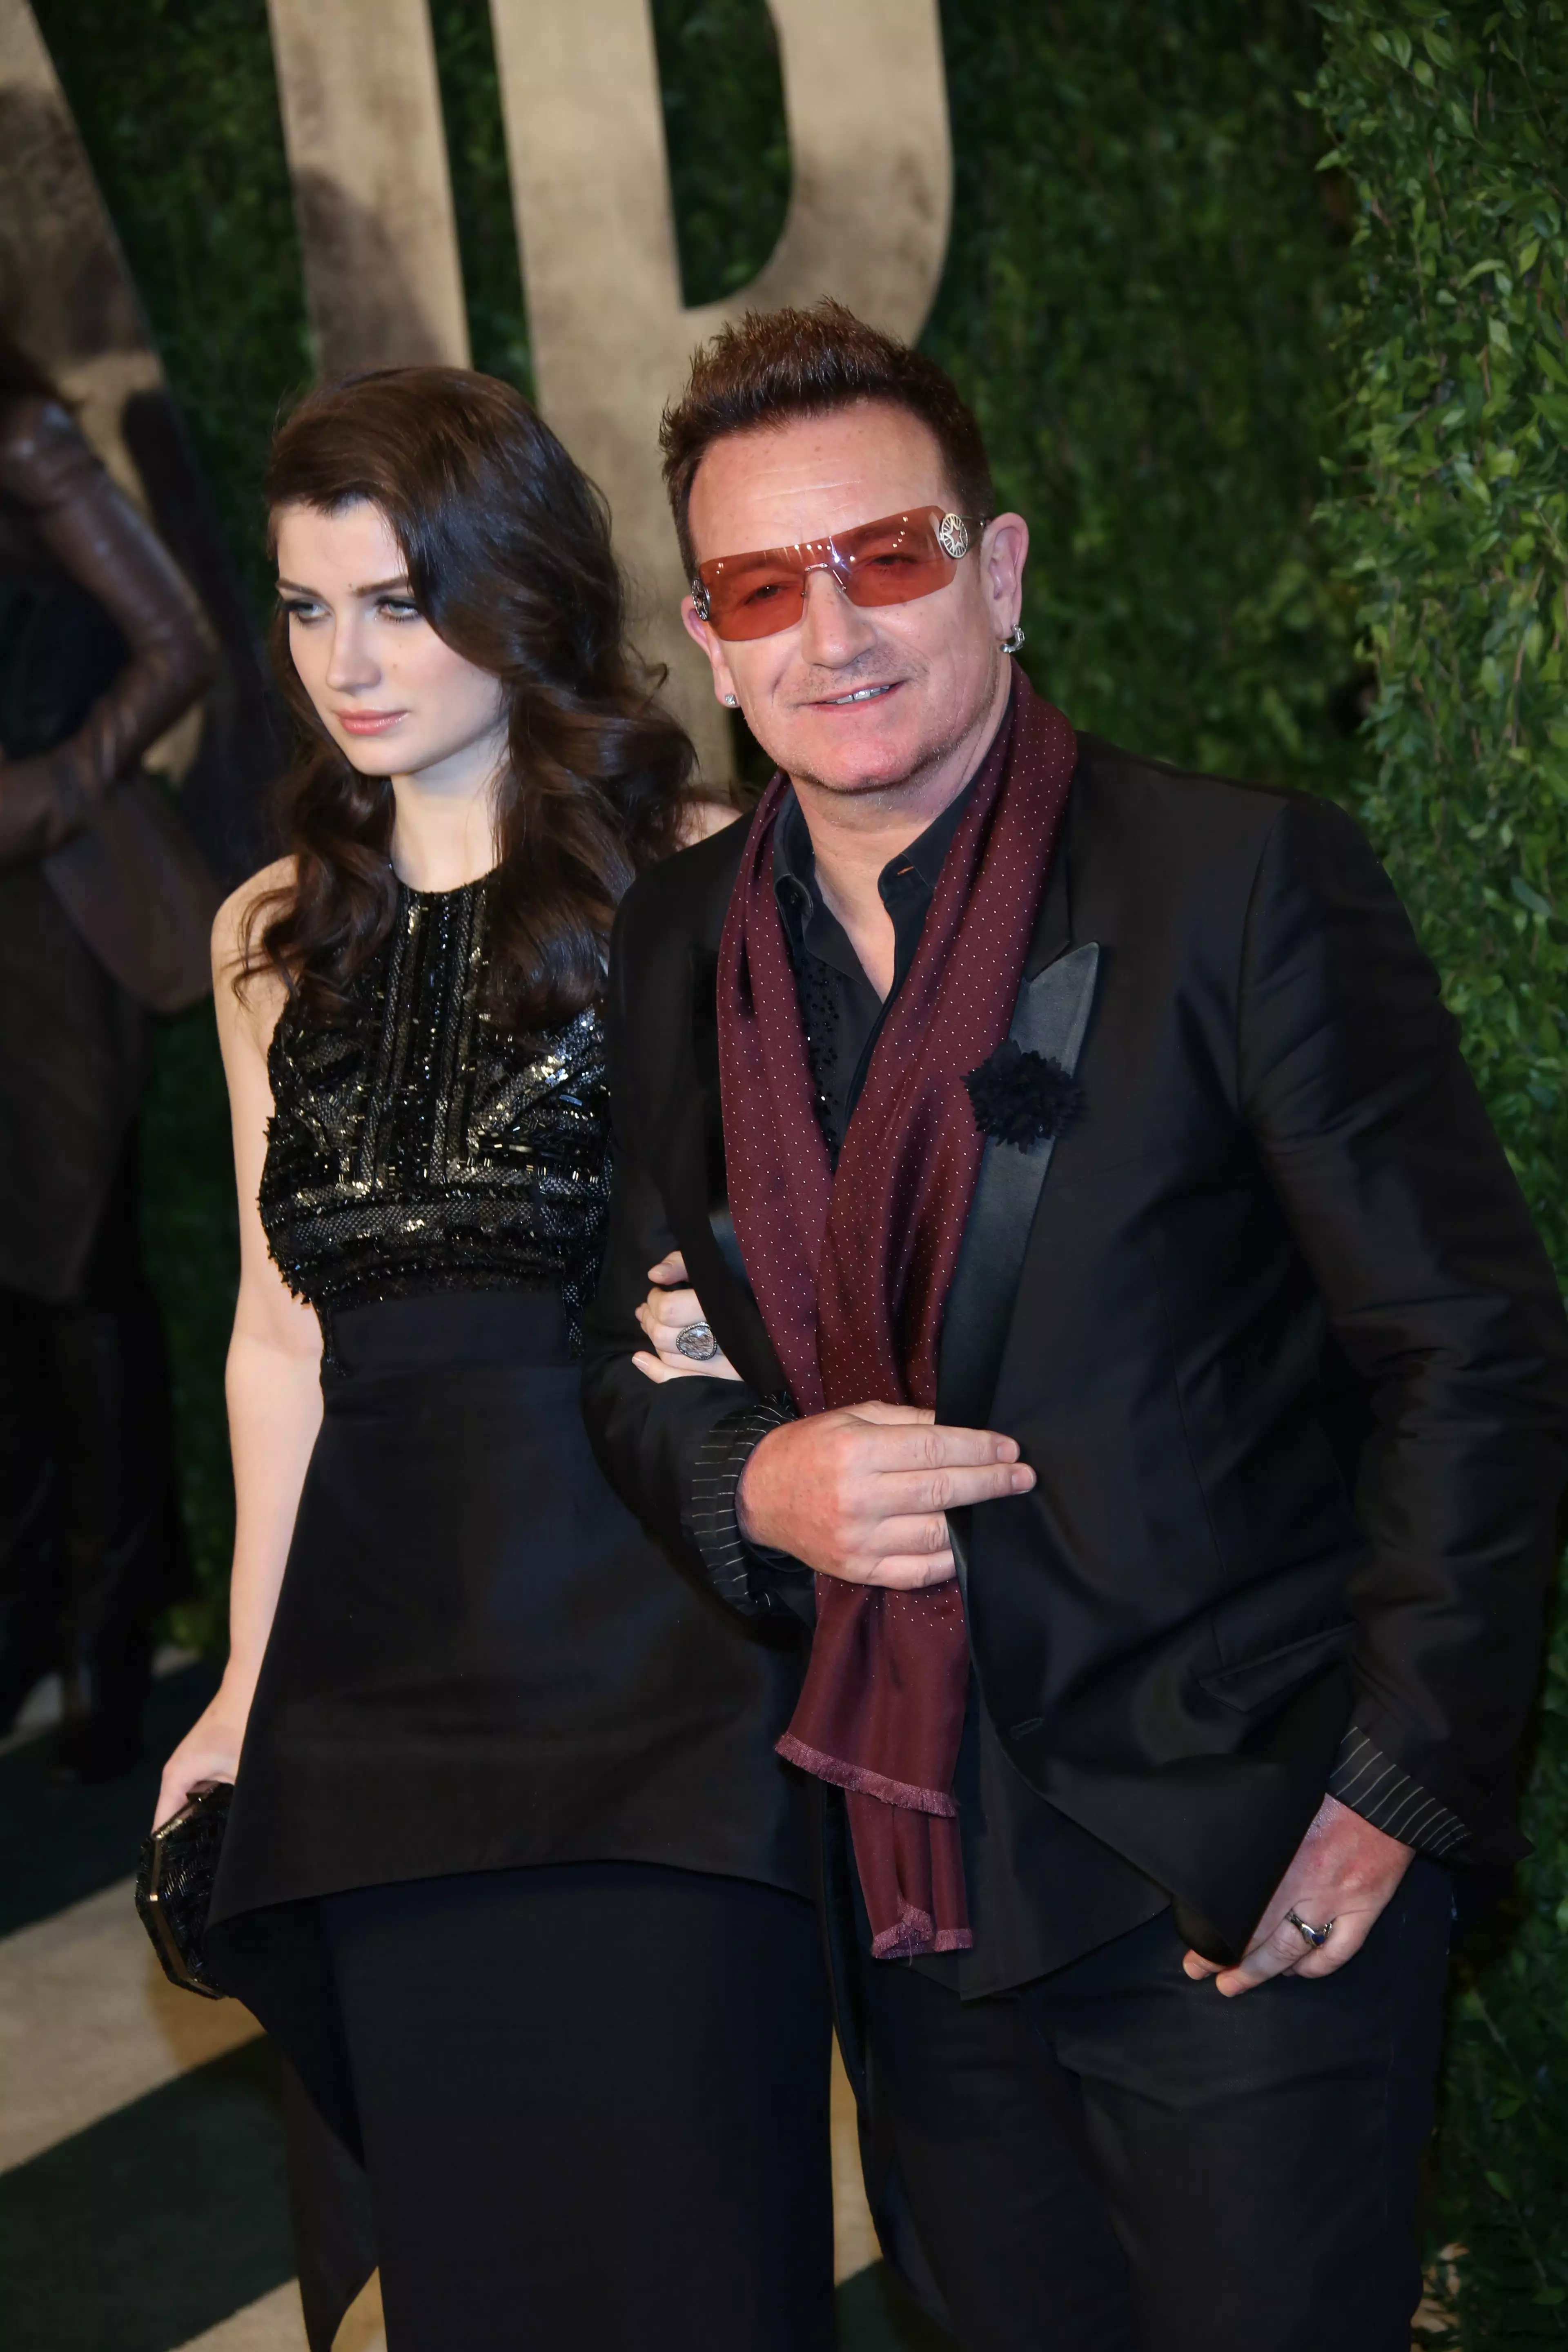 Eve Hewson is Bono's daughter.